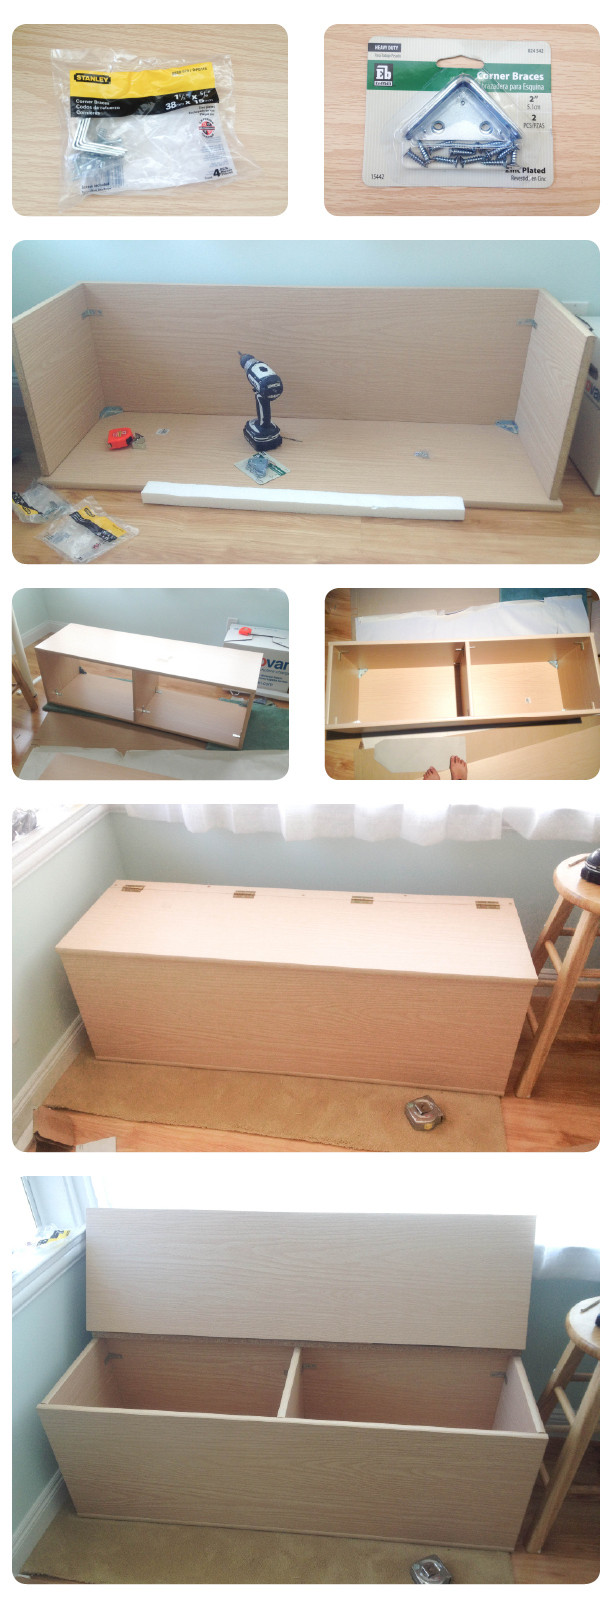 Building A Storage Bench
 Deck Storage Bench Plans Free wooden bedroom designs DIY